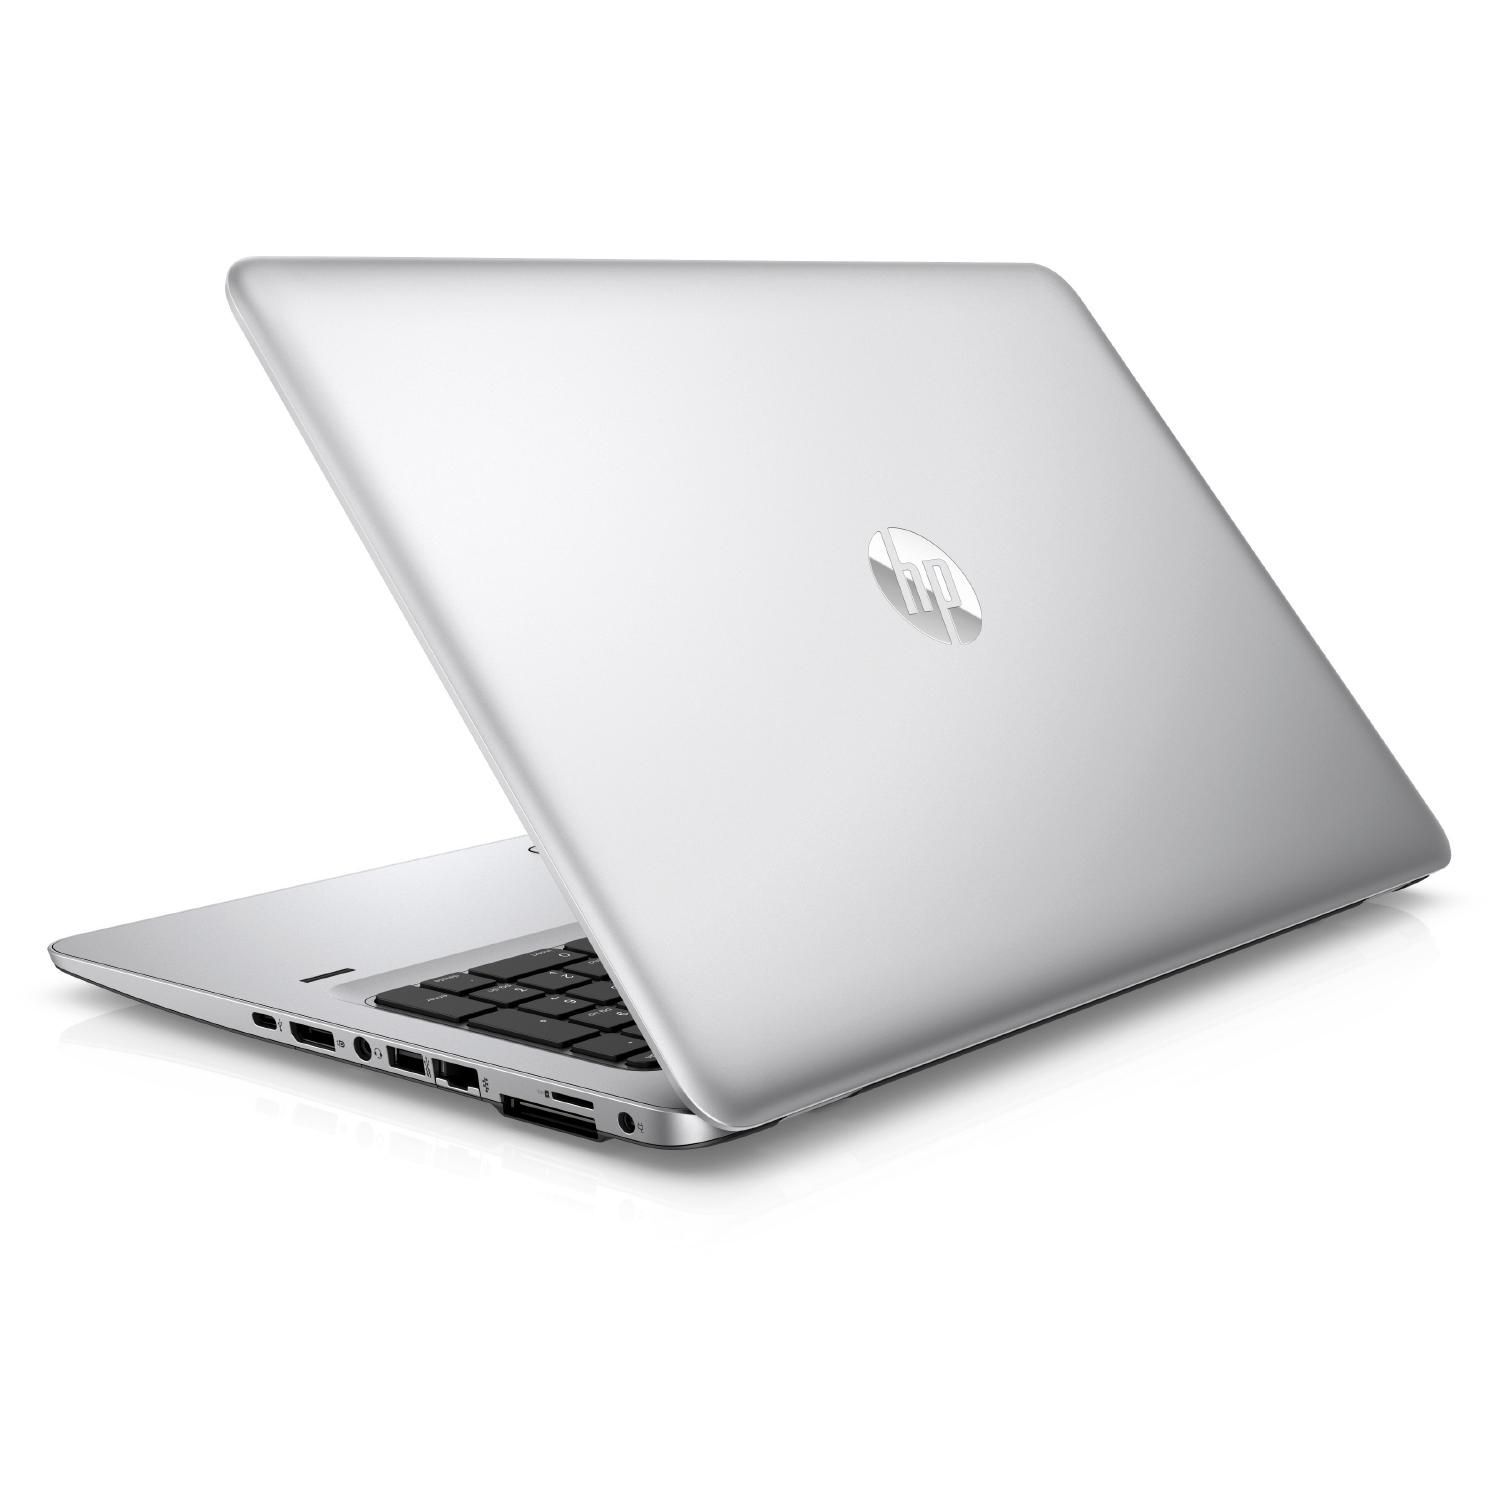 HP EliteBook 850 G3 Intel i5 6300U 2.40GHz 4GB RAM 240GB SSD 15.6" Win 10 Image 1